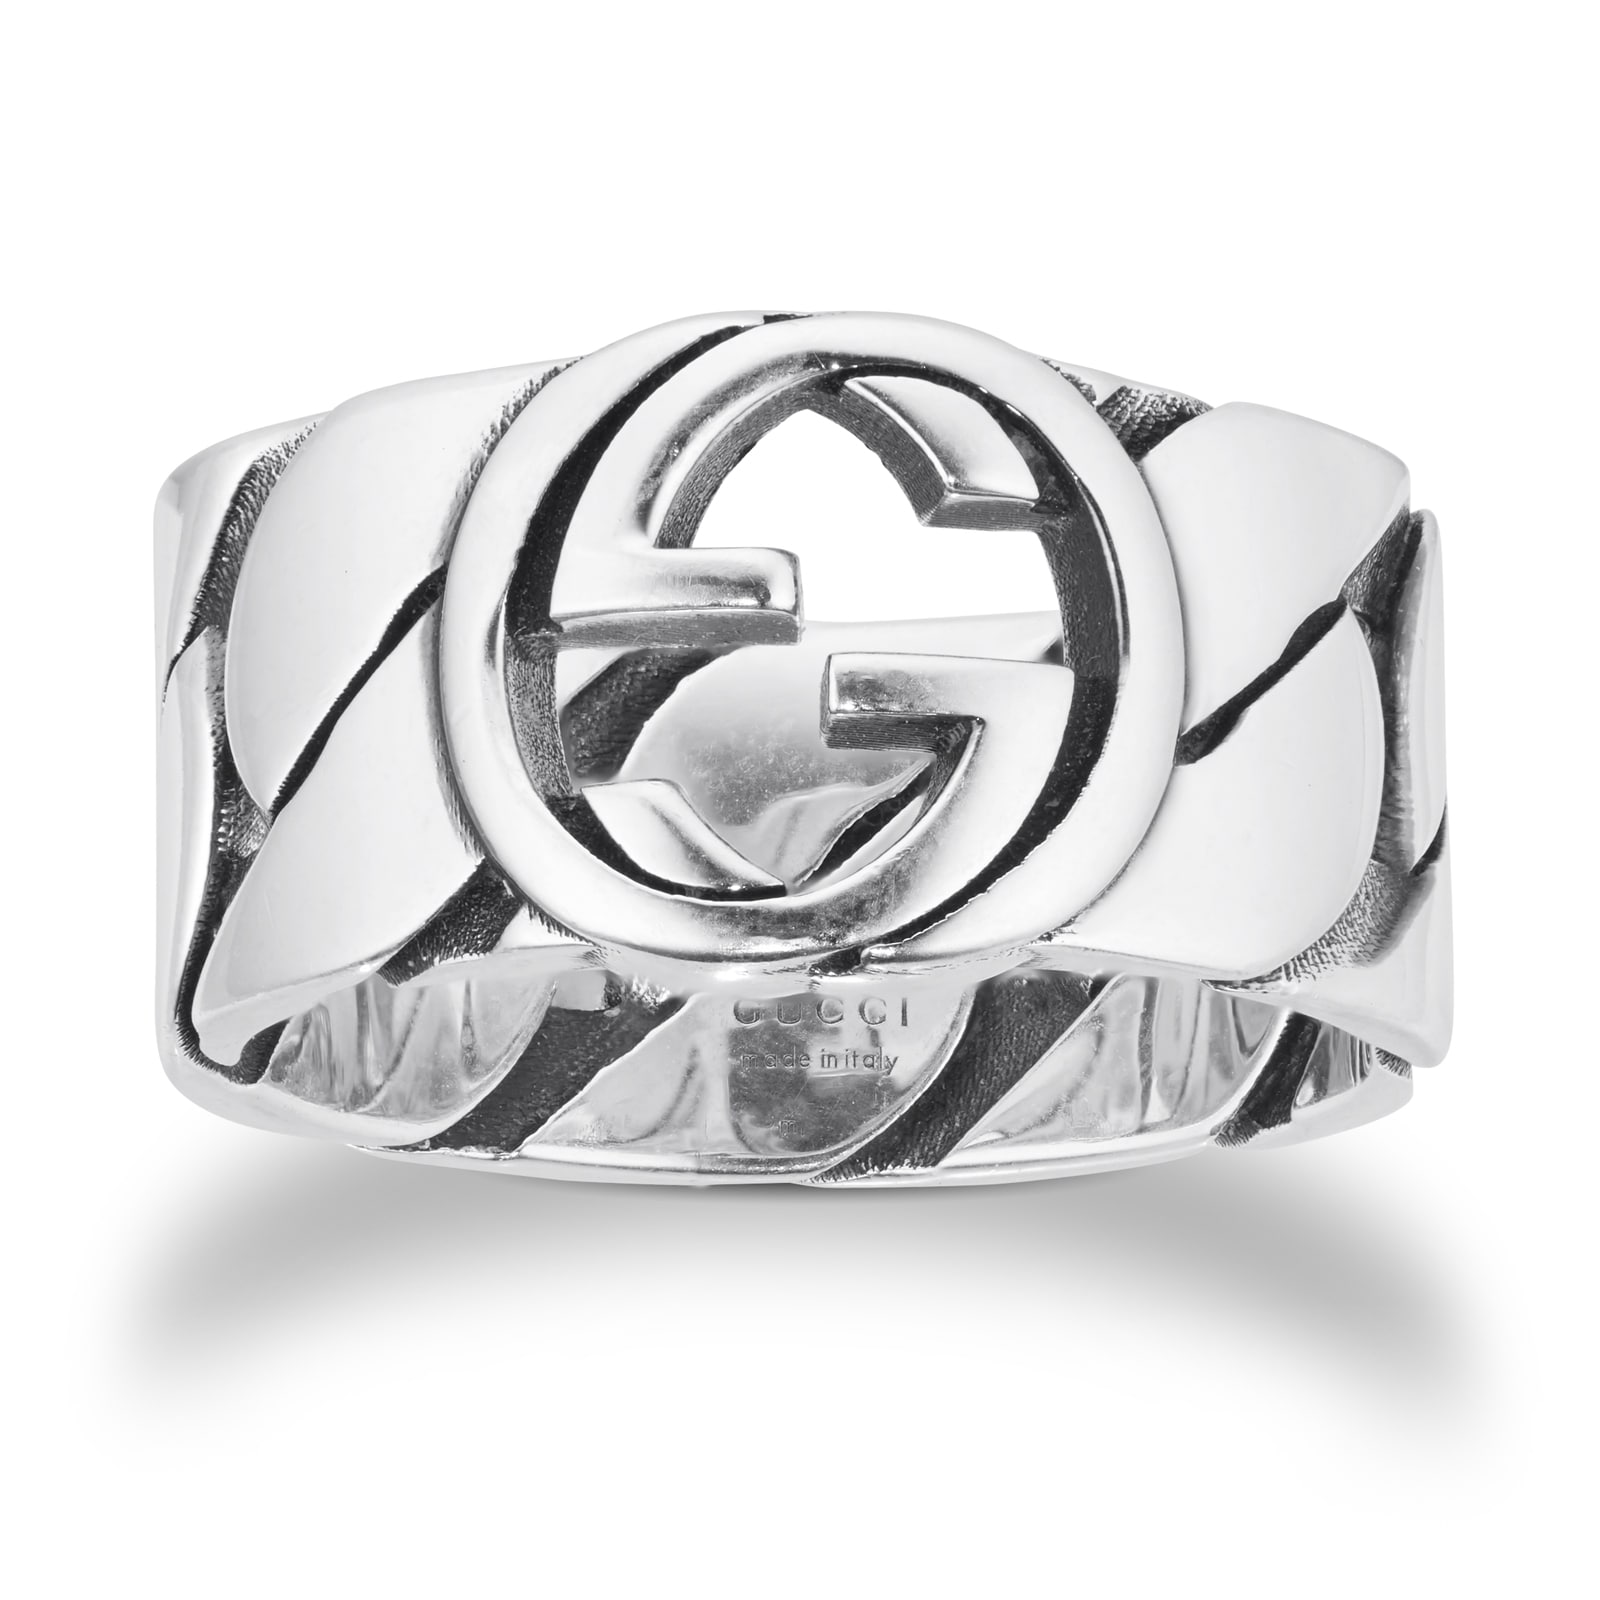 Gucci Interlocking G Sterling Silver 10mm Ring - Ring Size O